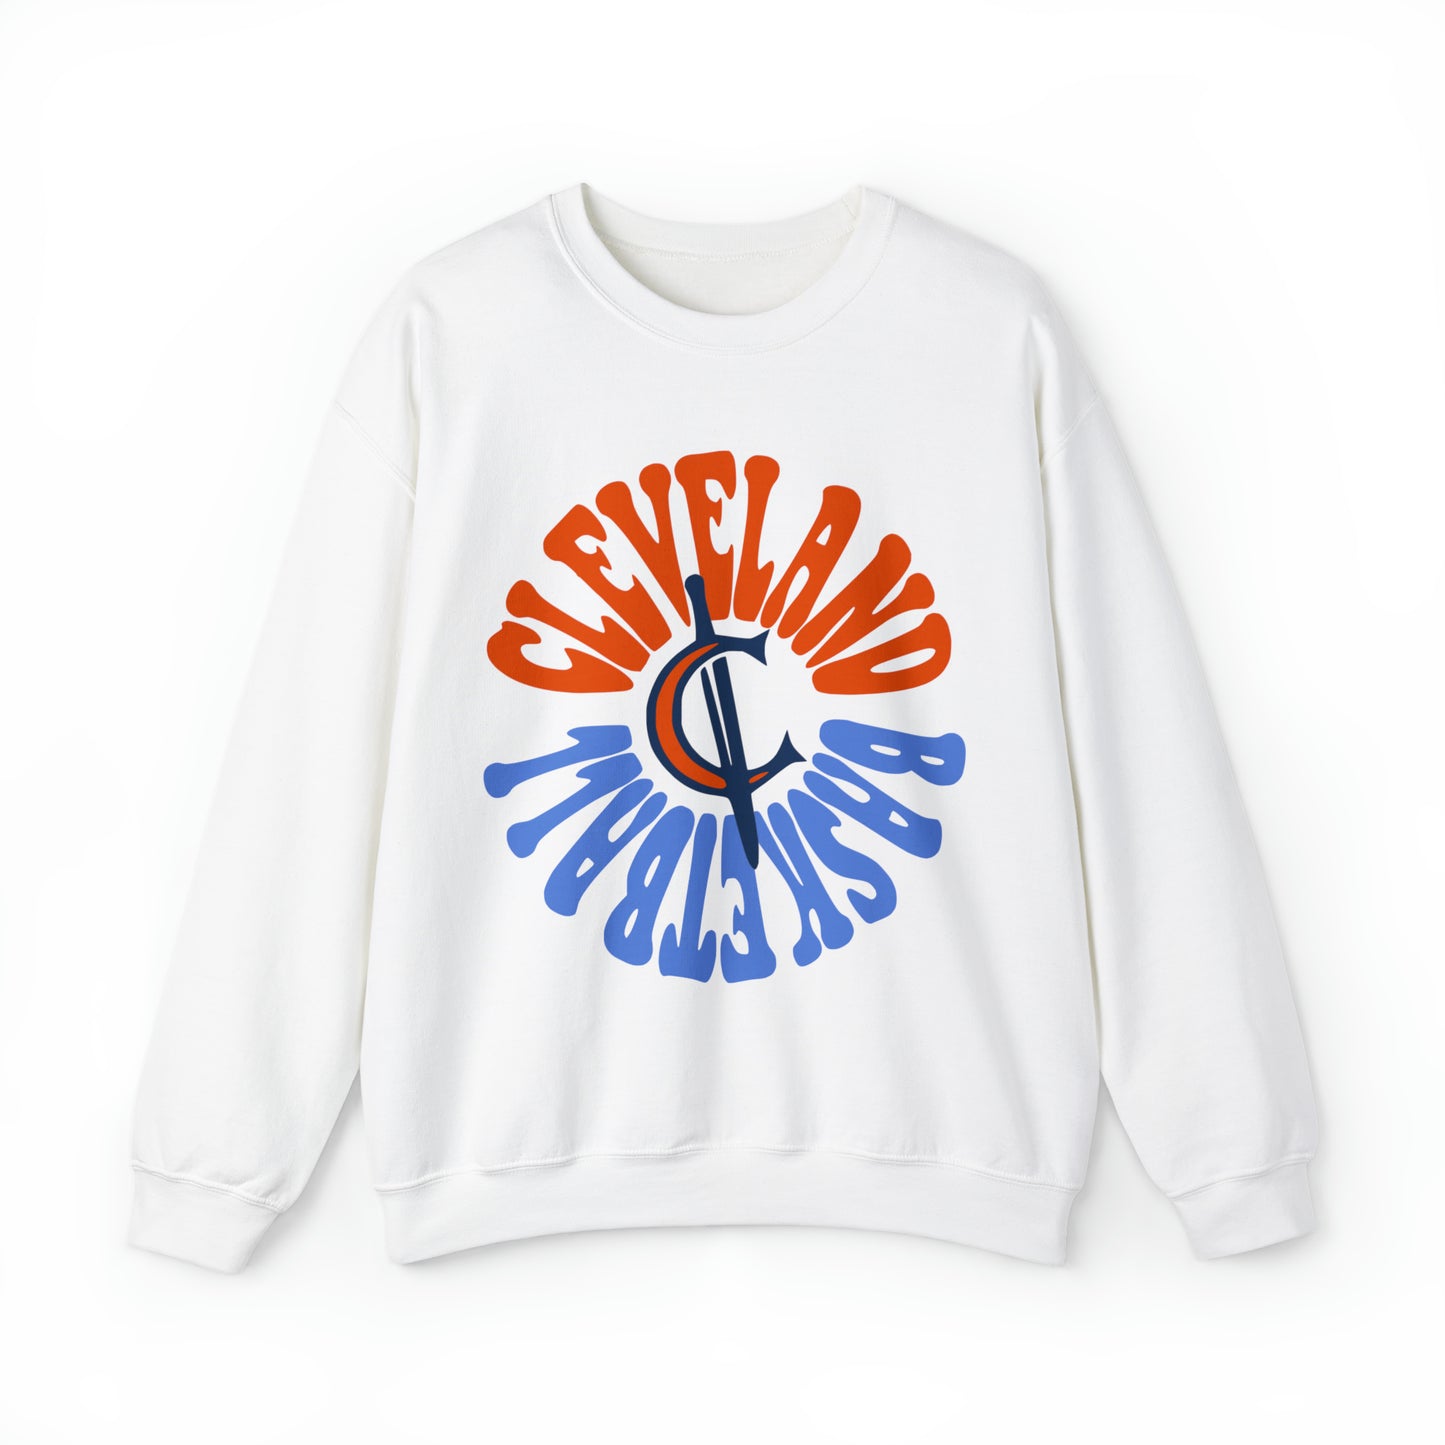 Throwback Cleveland Cavaliers Sweatshirt - Blue and Orange Vintage Style Basketball Crewneck